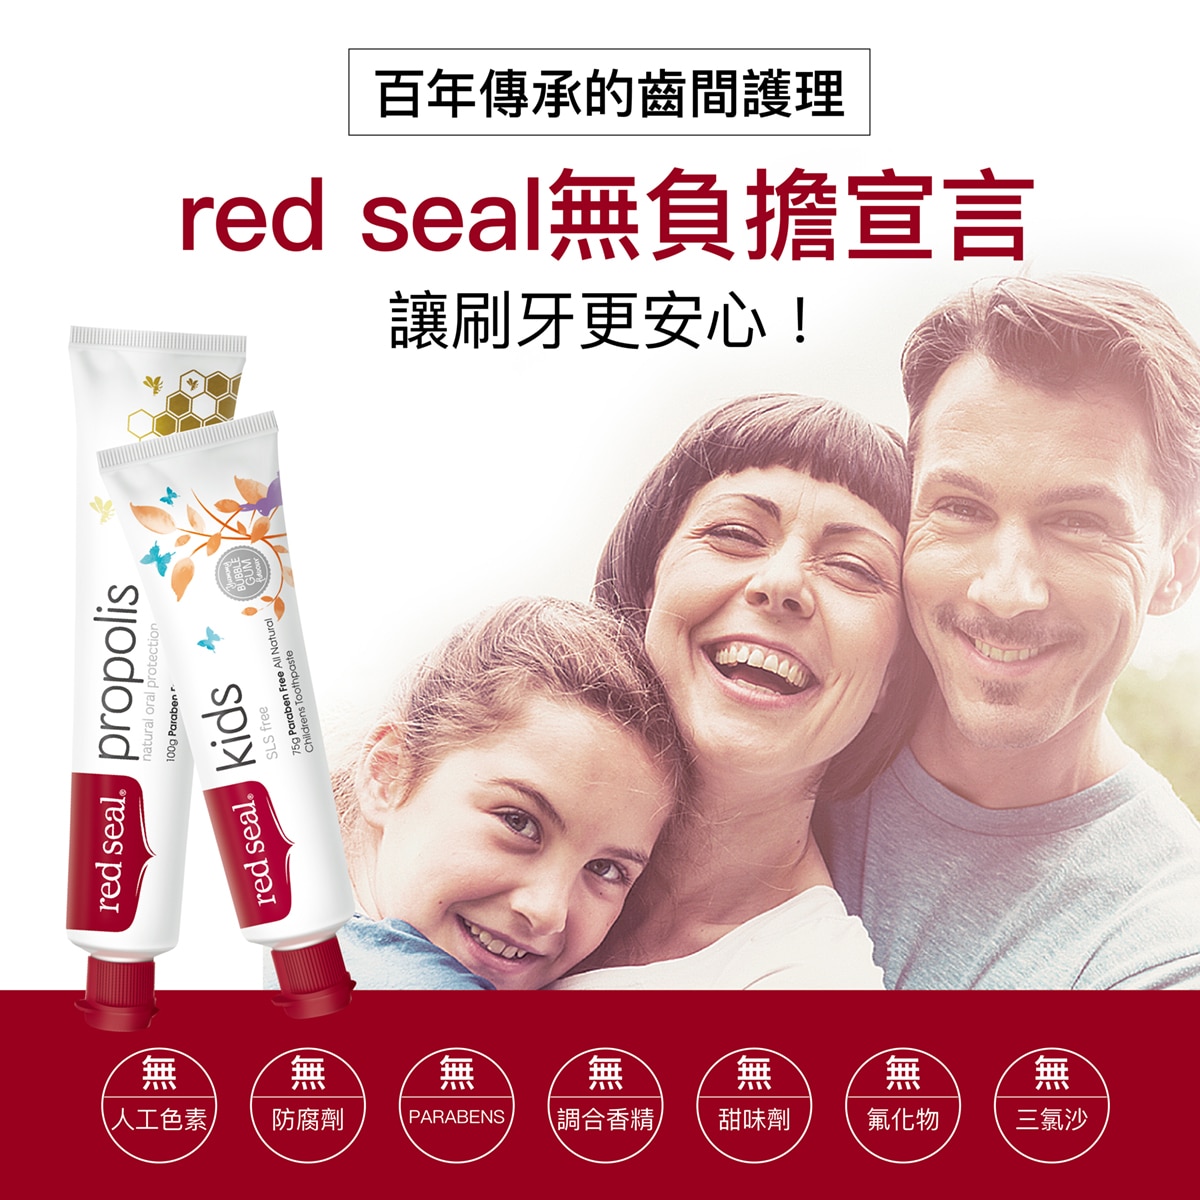 Red Seal 紅印蜂膠牙膏，無人工色素、防腐劑、PARABENS、調和香精、甜味劑、氟化物以及三氯沙。